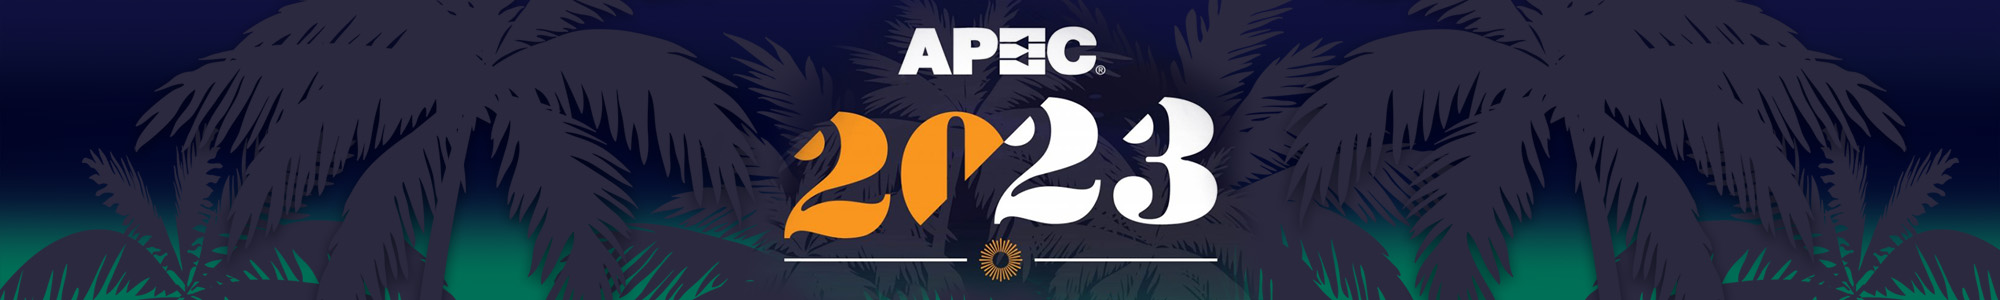 EPC APEC 2023